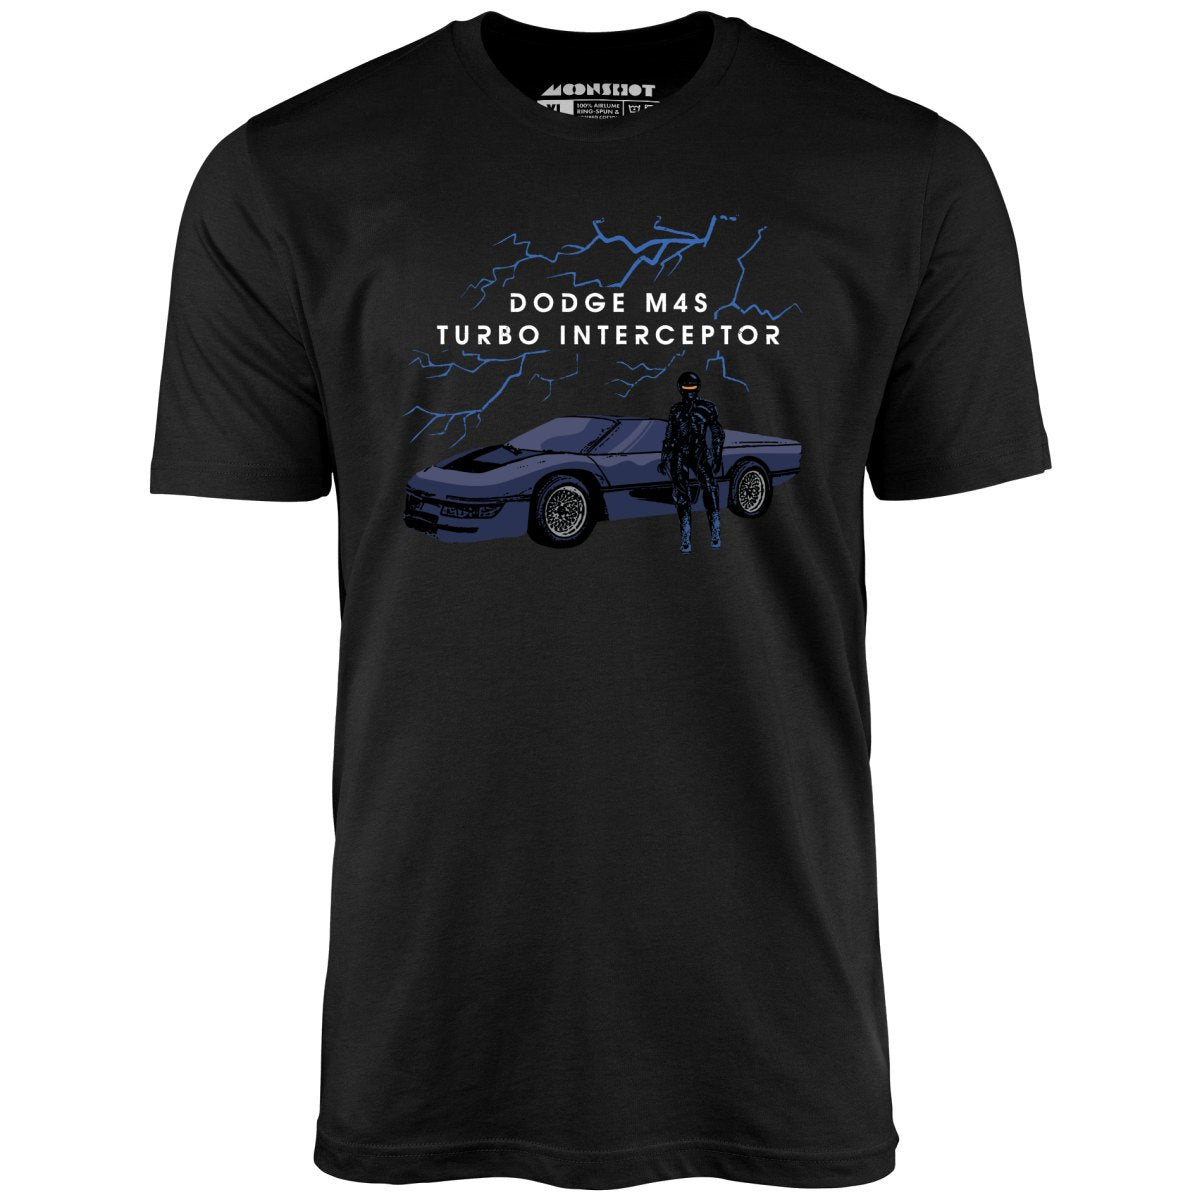 The Wraith - Dodge M4S Turbo Interceptor - Unisex T-Shirt